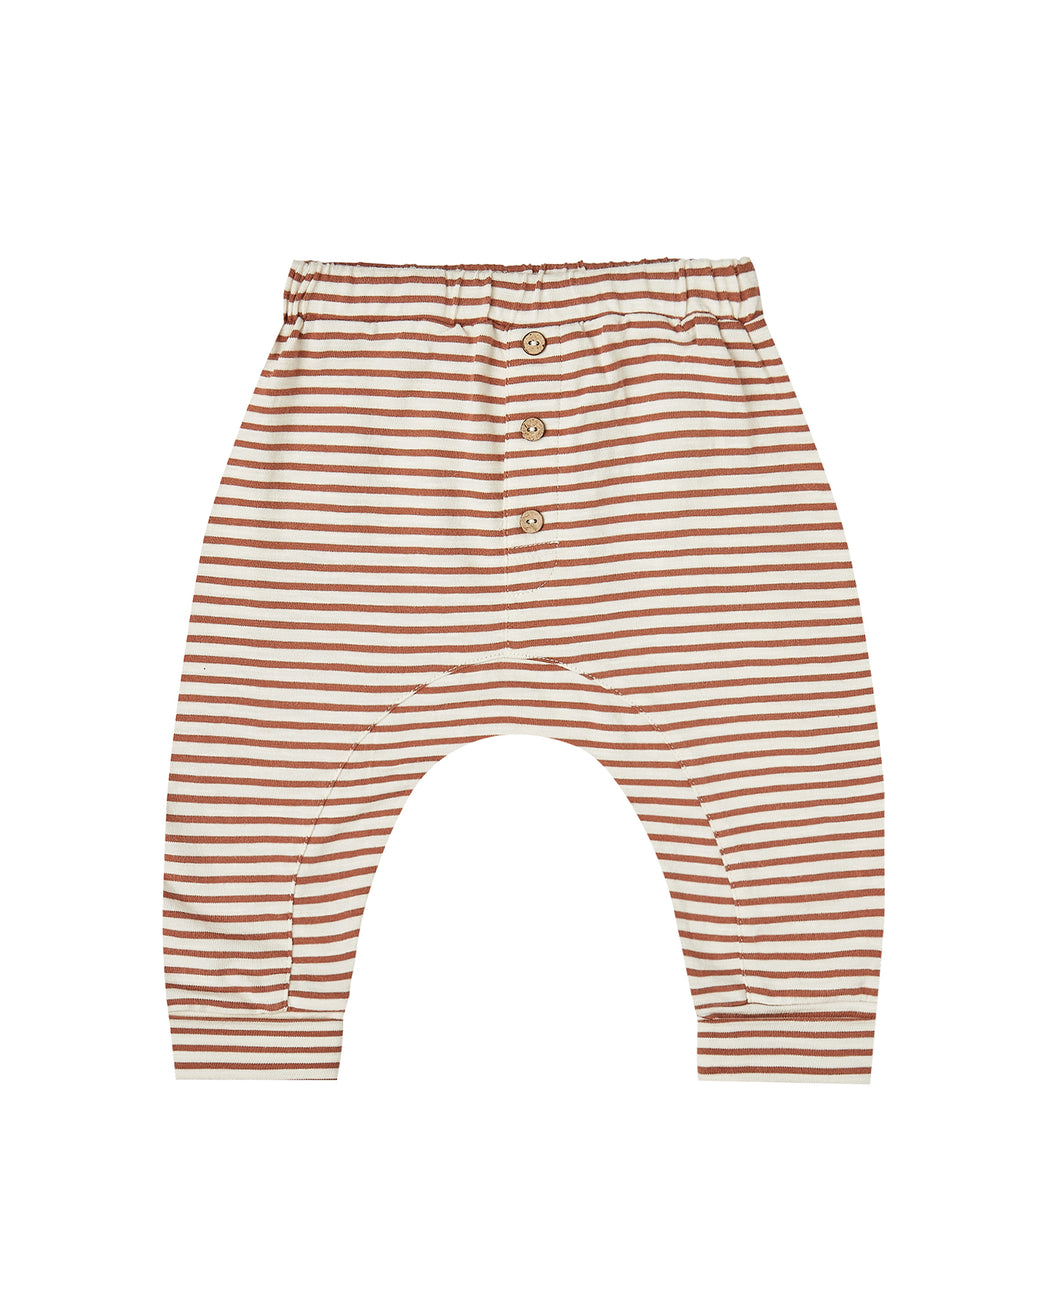 Slub Baby Pant – Amber Ivory Stripe